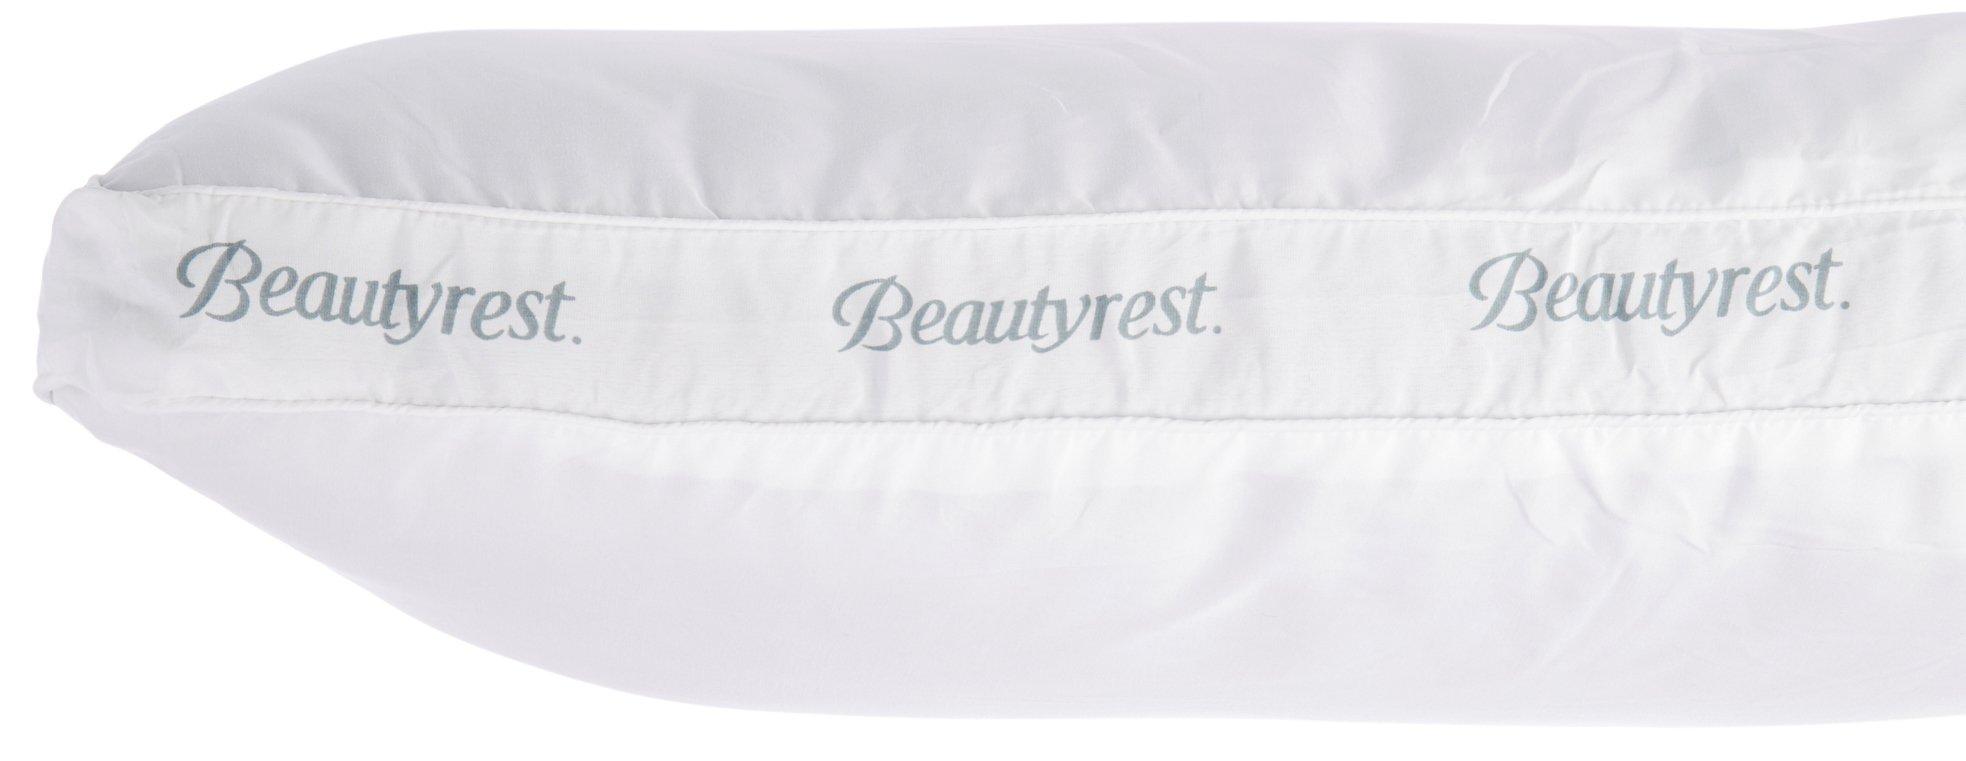 Beautyrest Extra Firm Support Gusseted Pillow